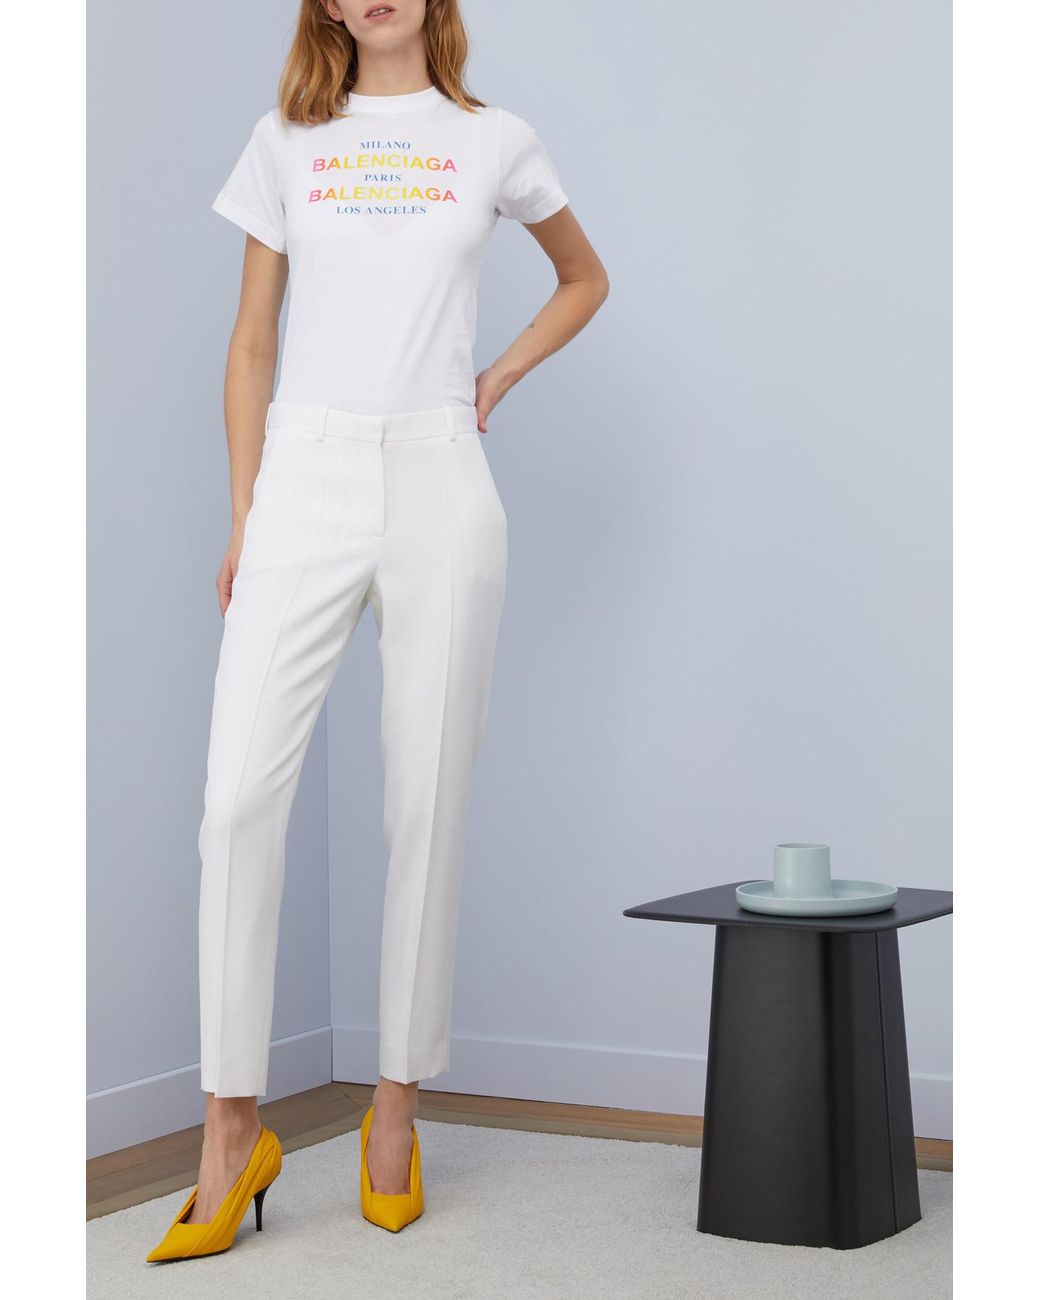 Balenciaga Paris Milano La T-shirt in White | Lyst